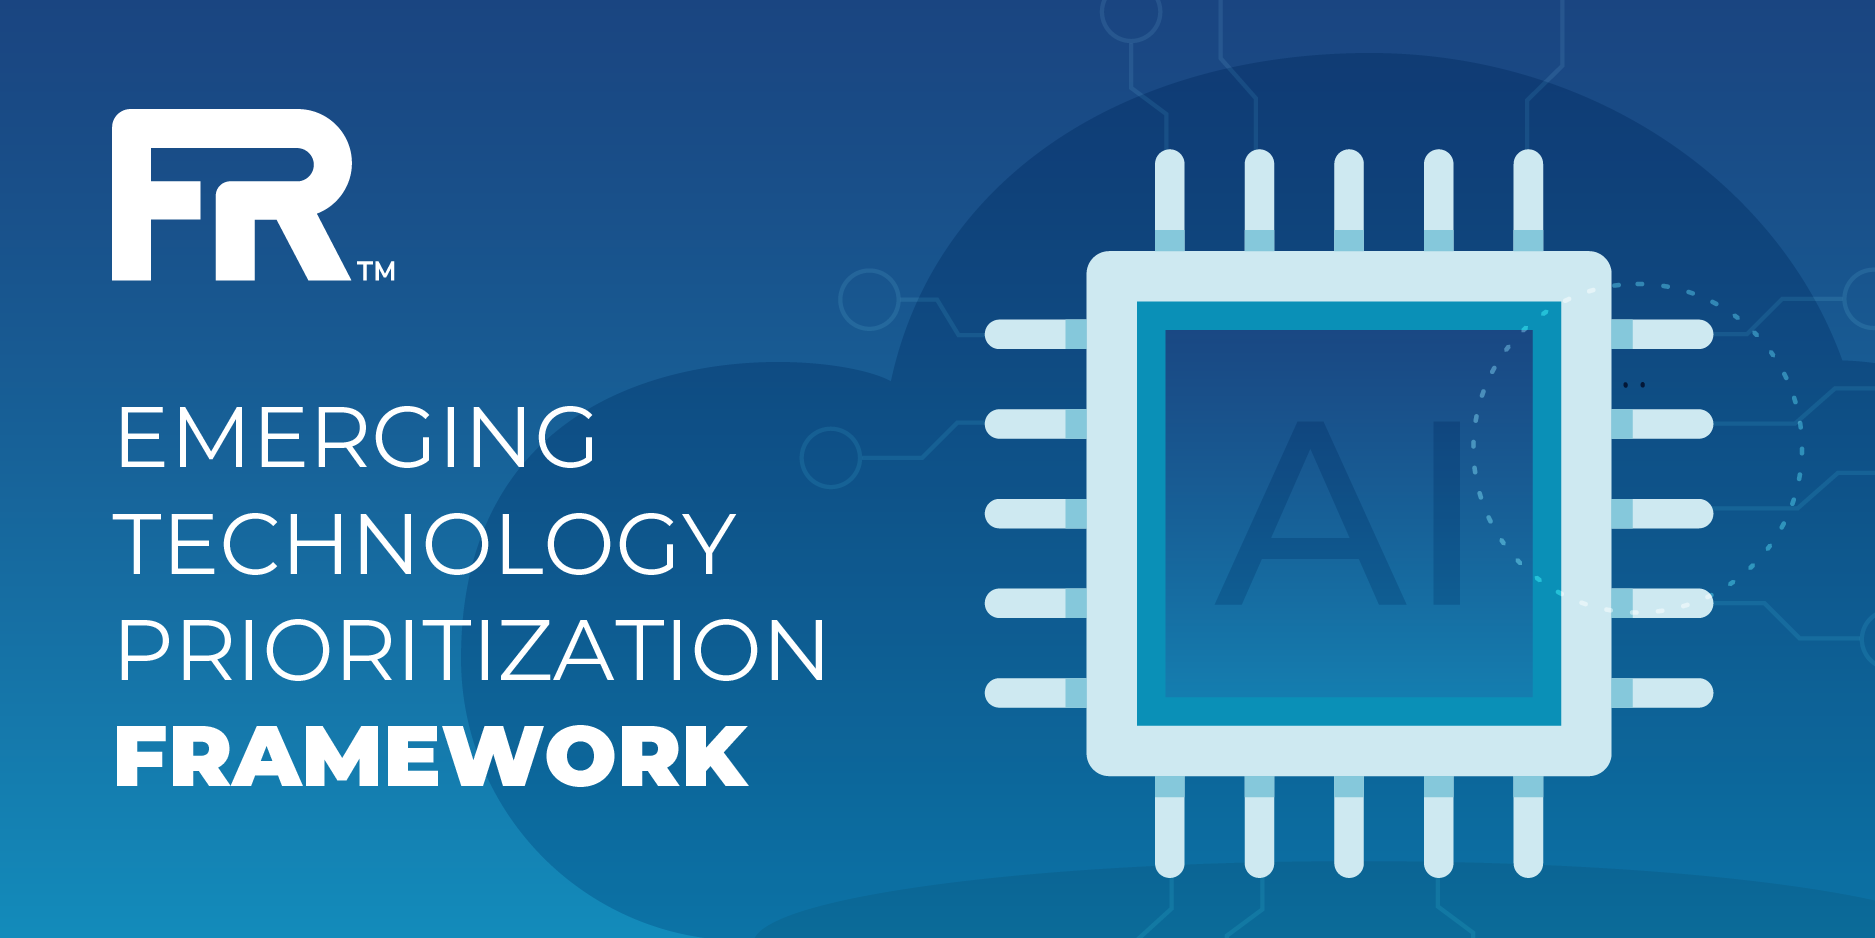 Release of Emerging Technology Prioritization Framework